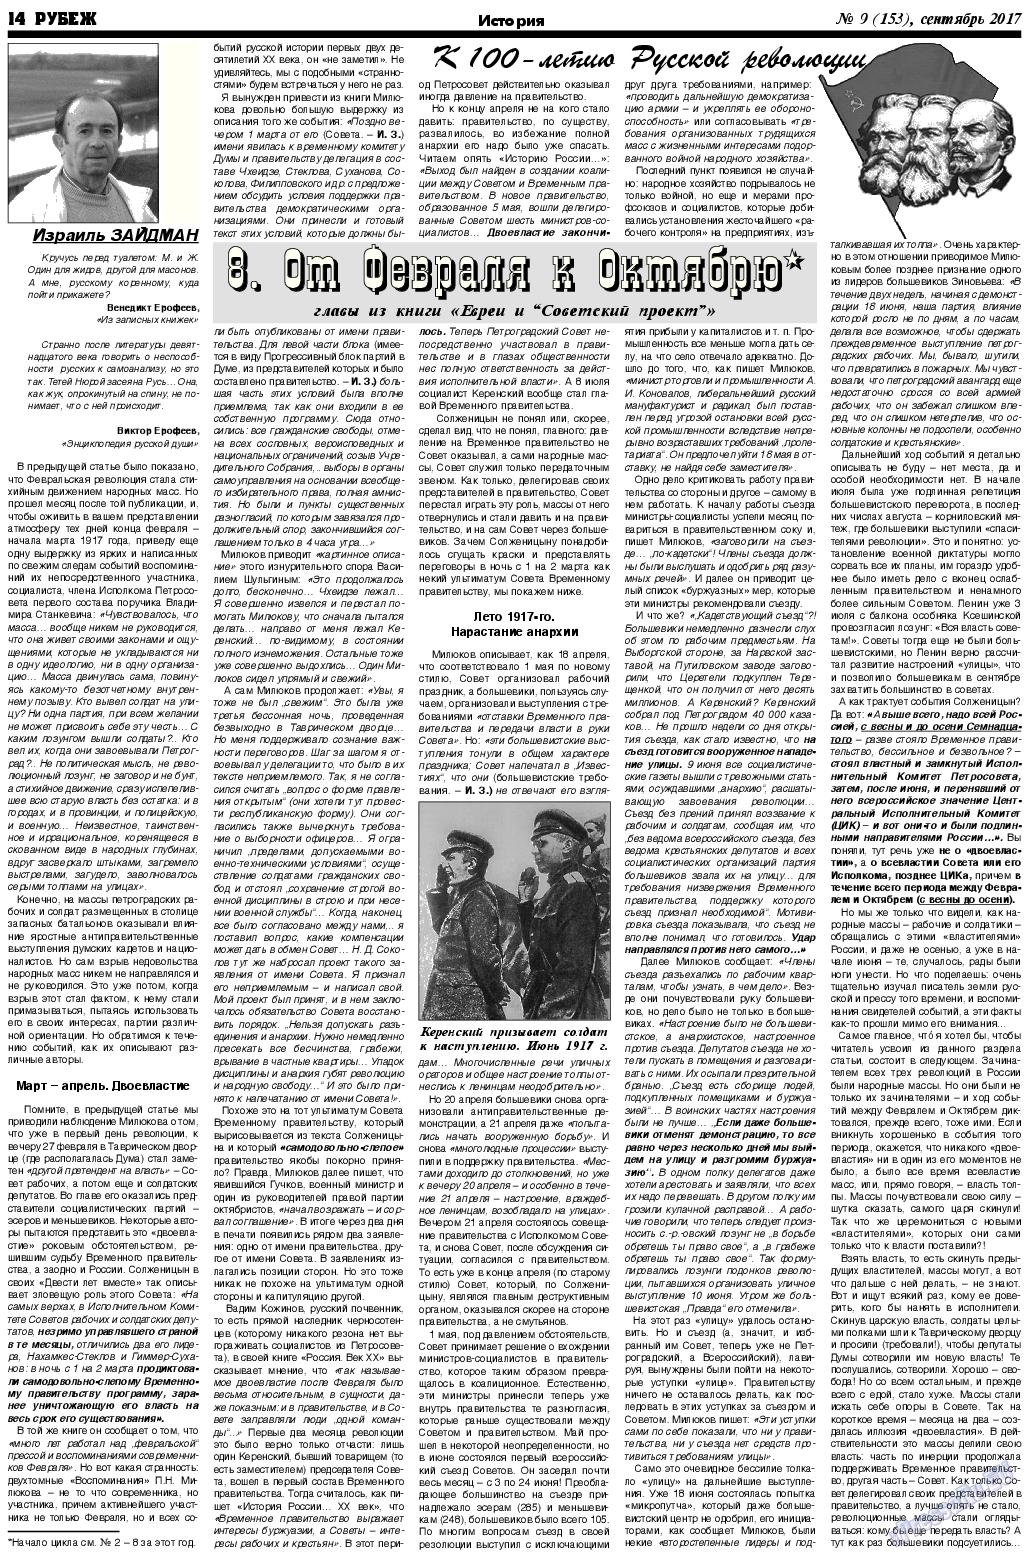 Рубеж, газета. 2017 №9 стр.14